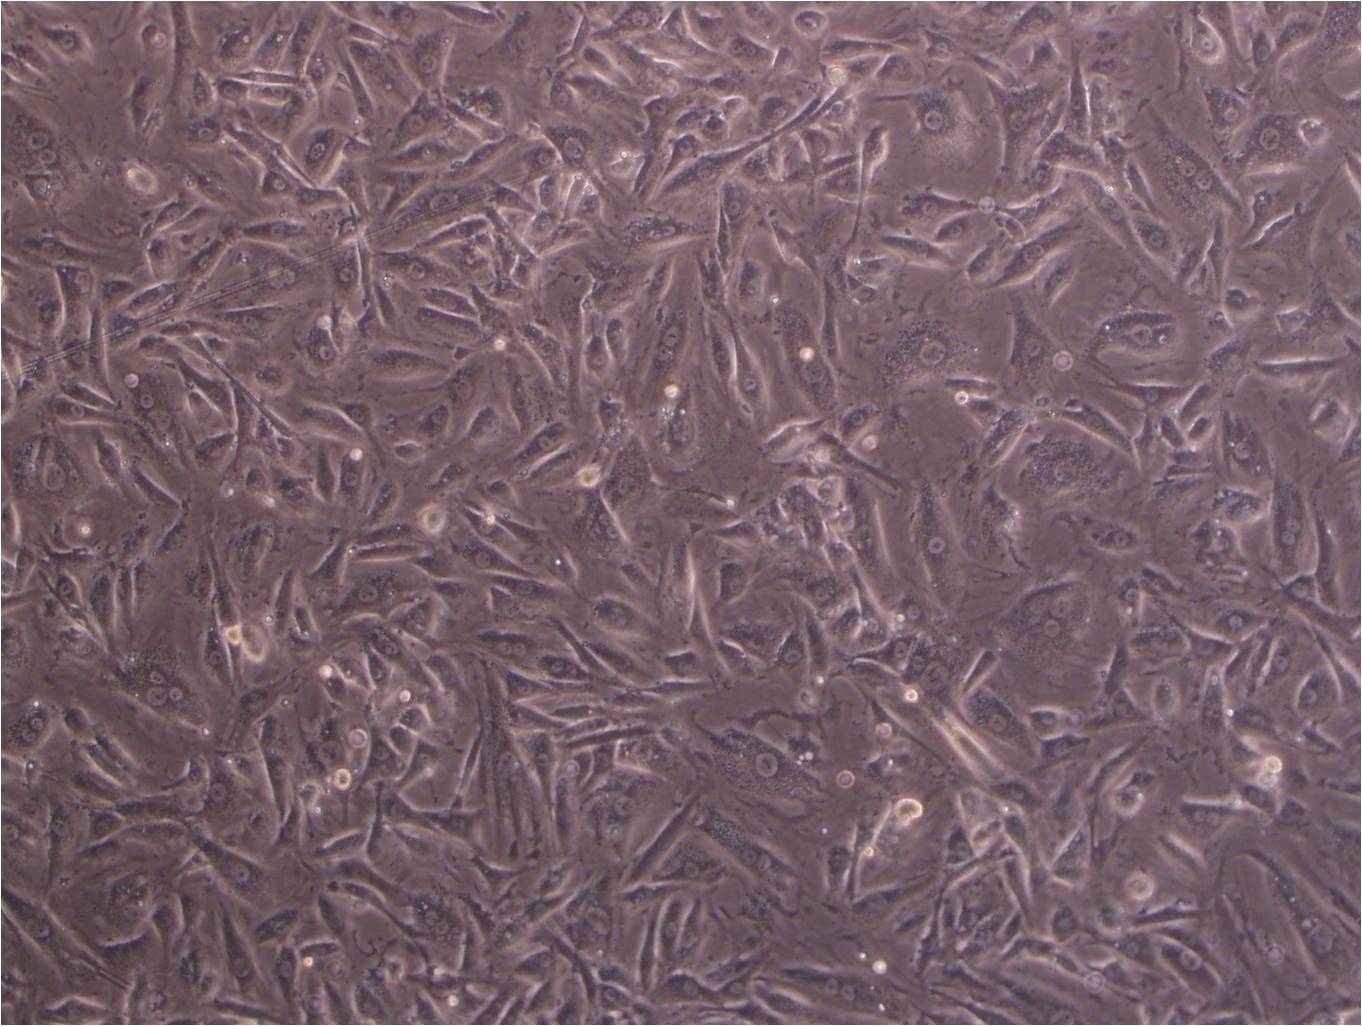 KYSE-140 epithelioid cells人食管鳞癌细胞系